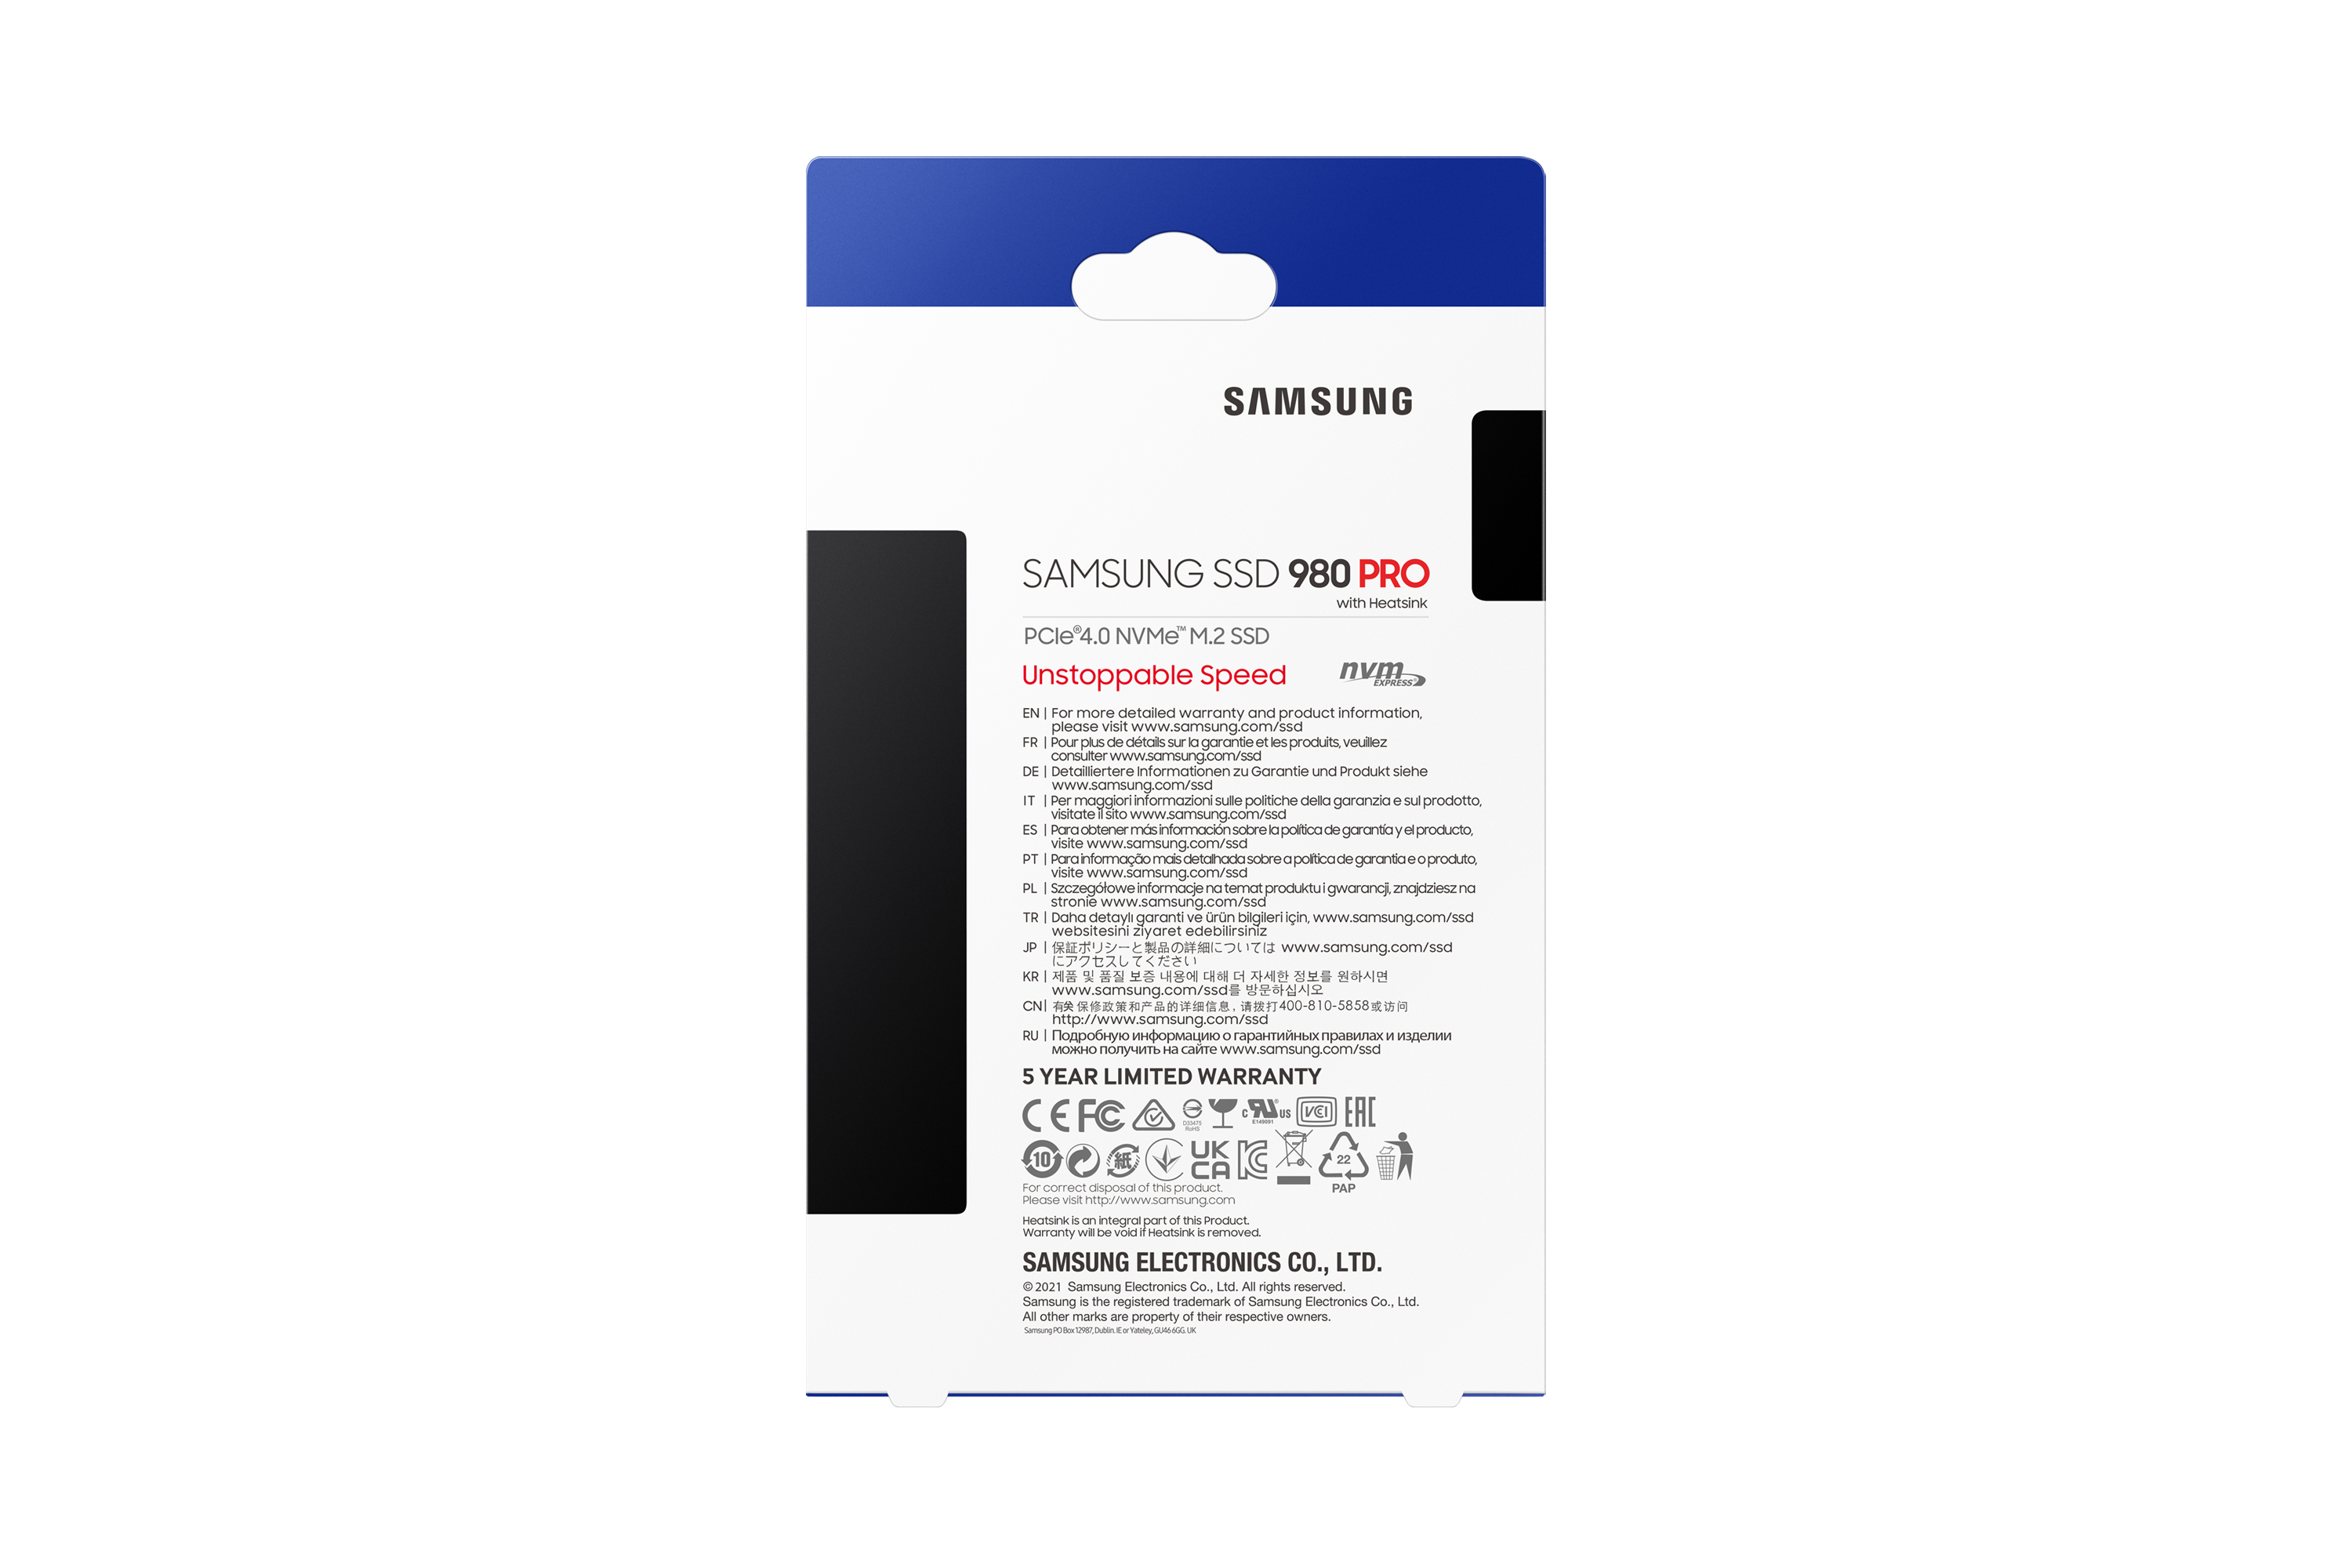 SAMSUNG SSD Festplatte 980 Pro, M.2, 1 TB, Heatsink, NVMe, PCIe 4.0 x 4, retail